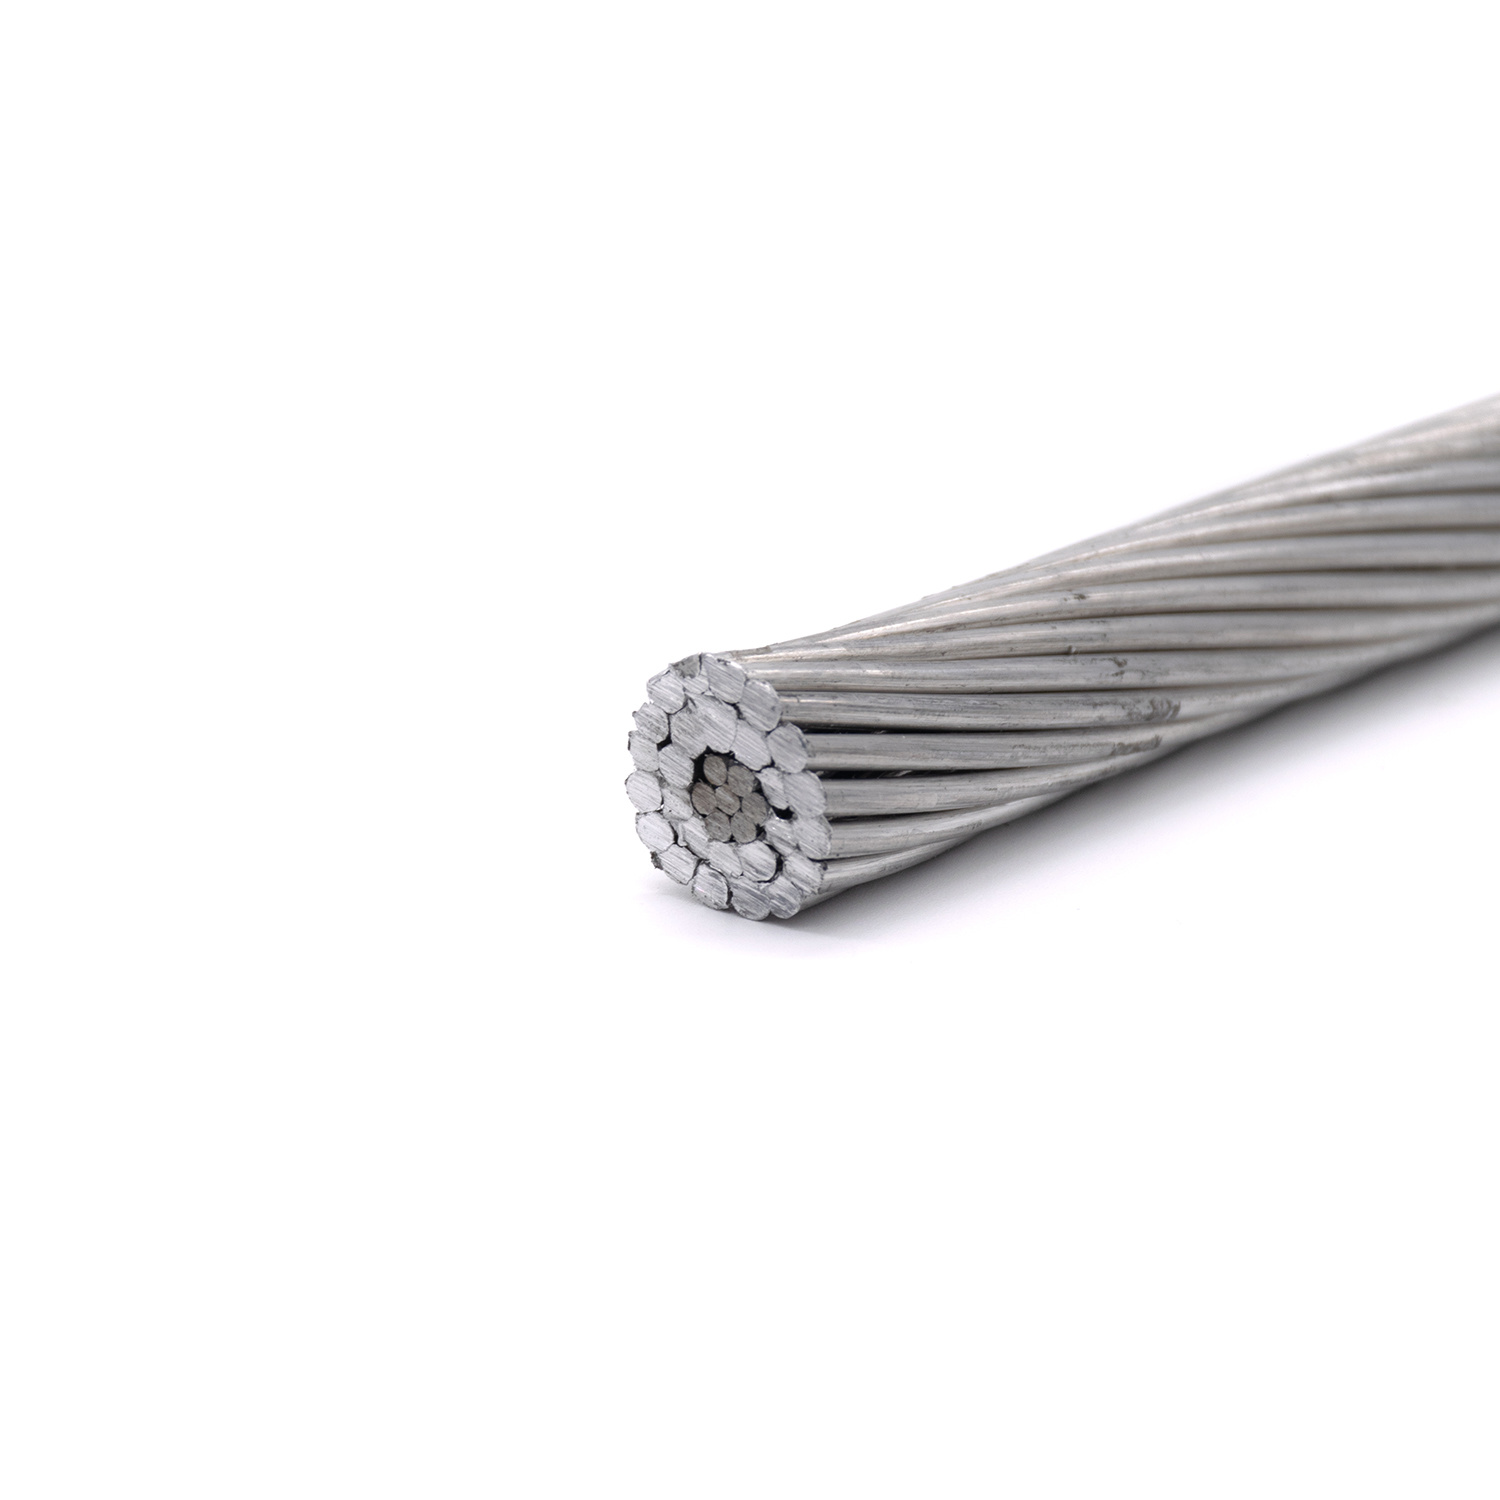 ASTM Standard Bare Reinforced Aluminium ACSR Conductor Cable